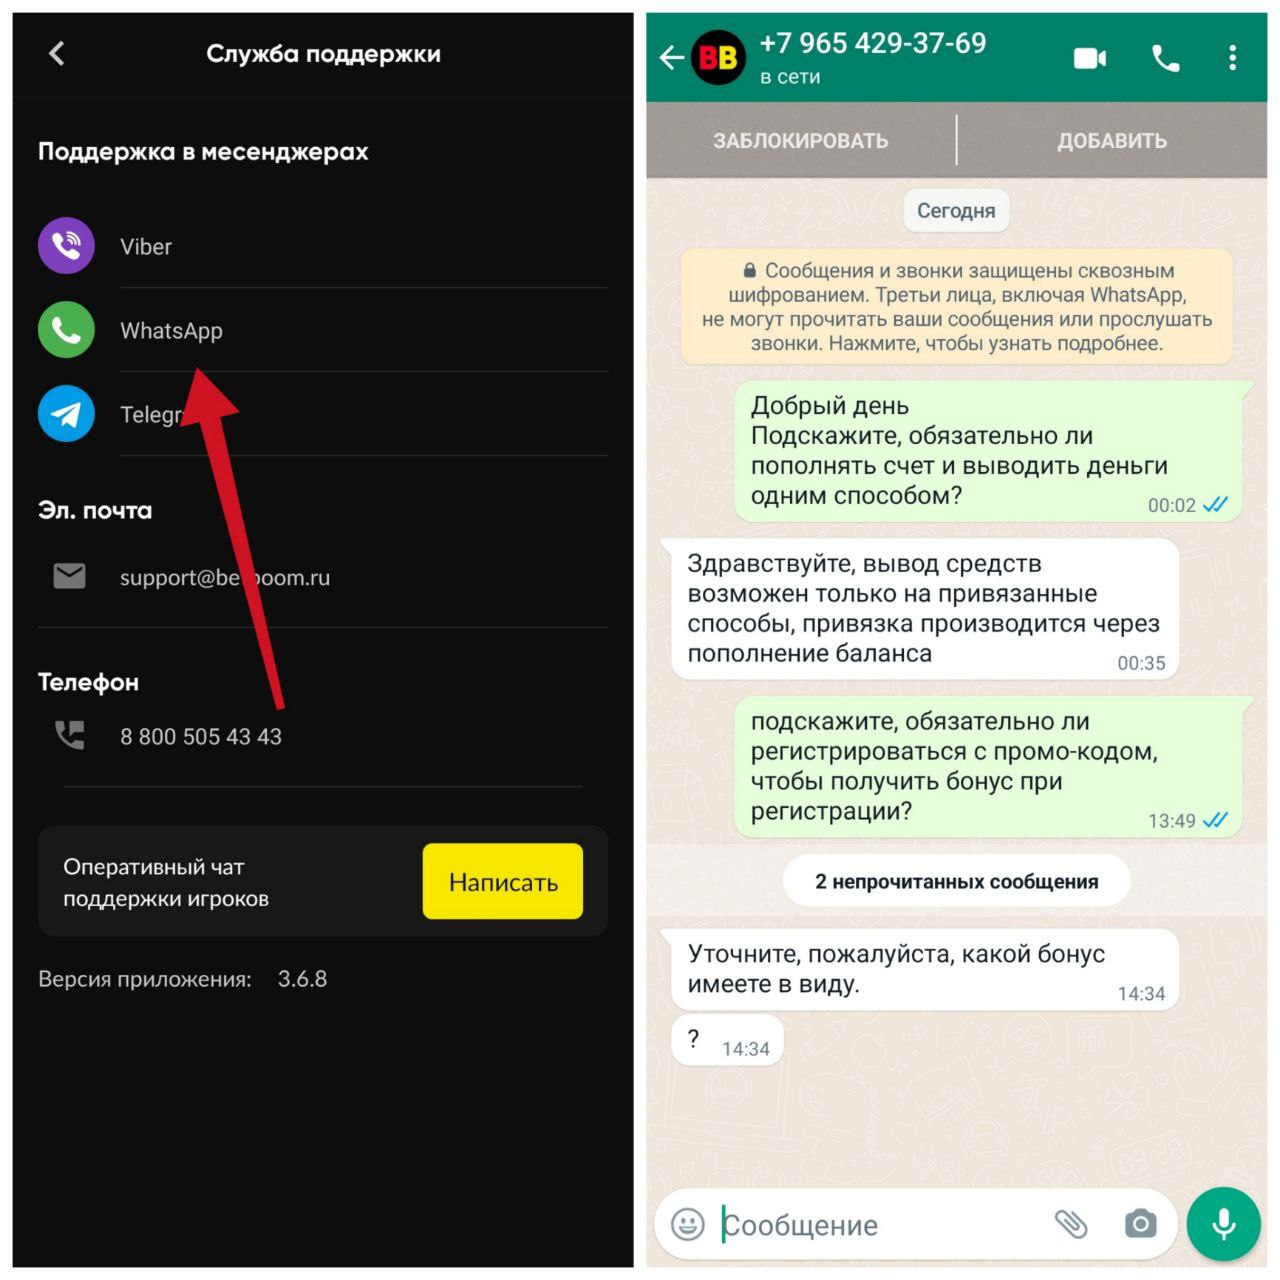 Обращение в службу поддержки BetBoom через WhatsApp